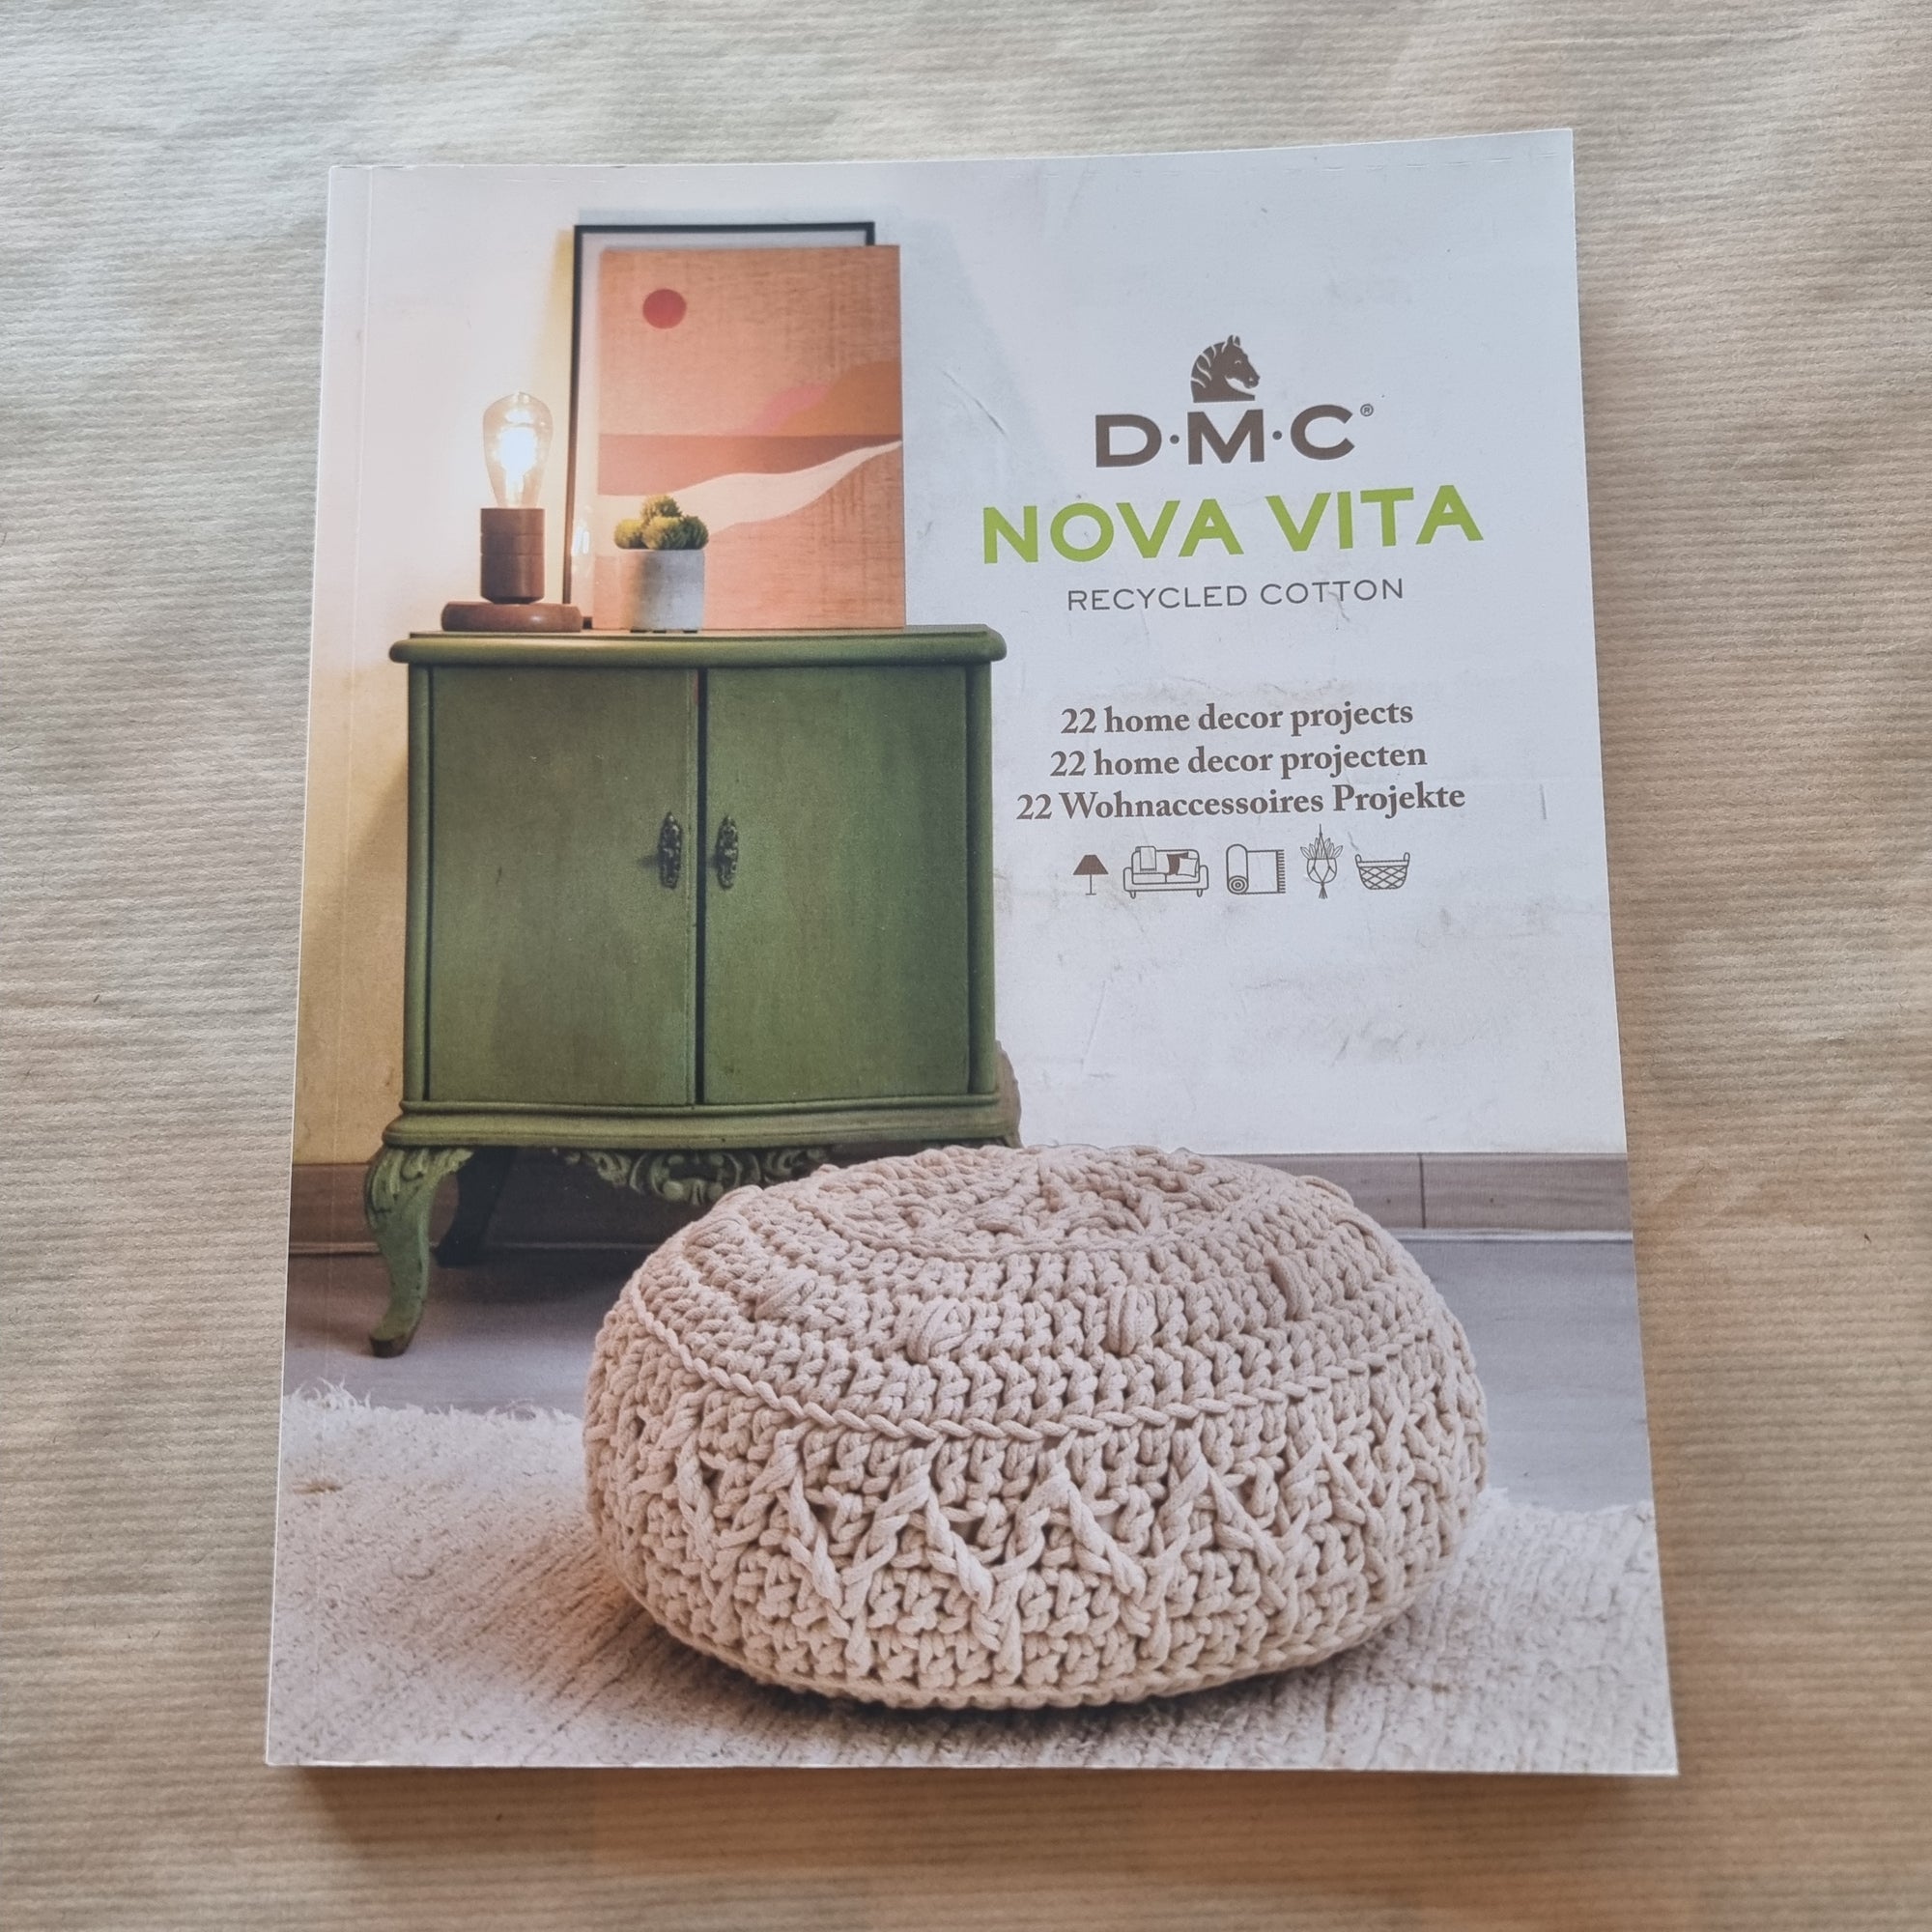 D.M.C Nova Vita 22 Home Decor Projects